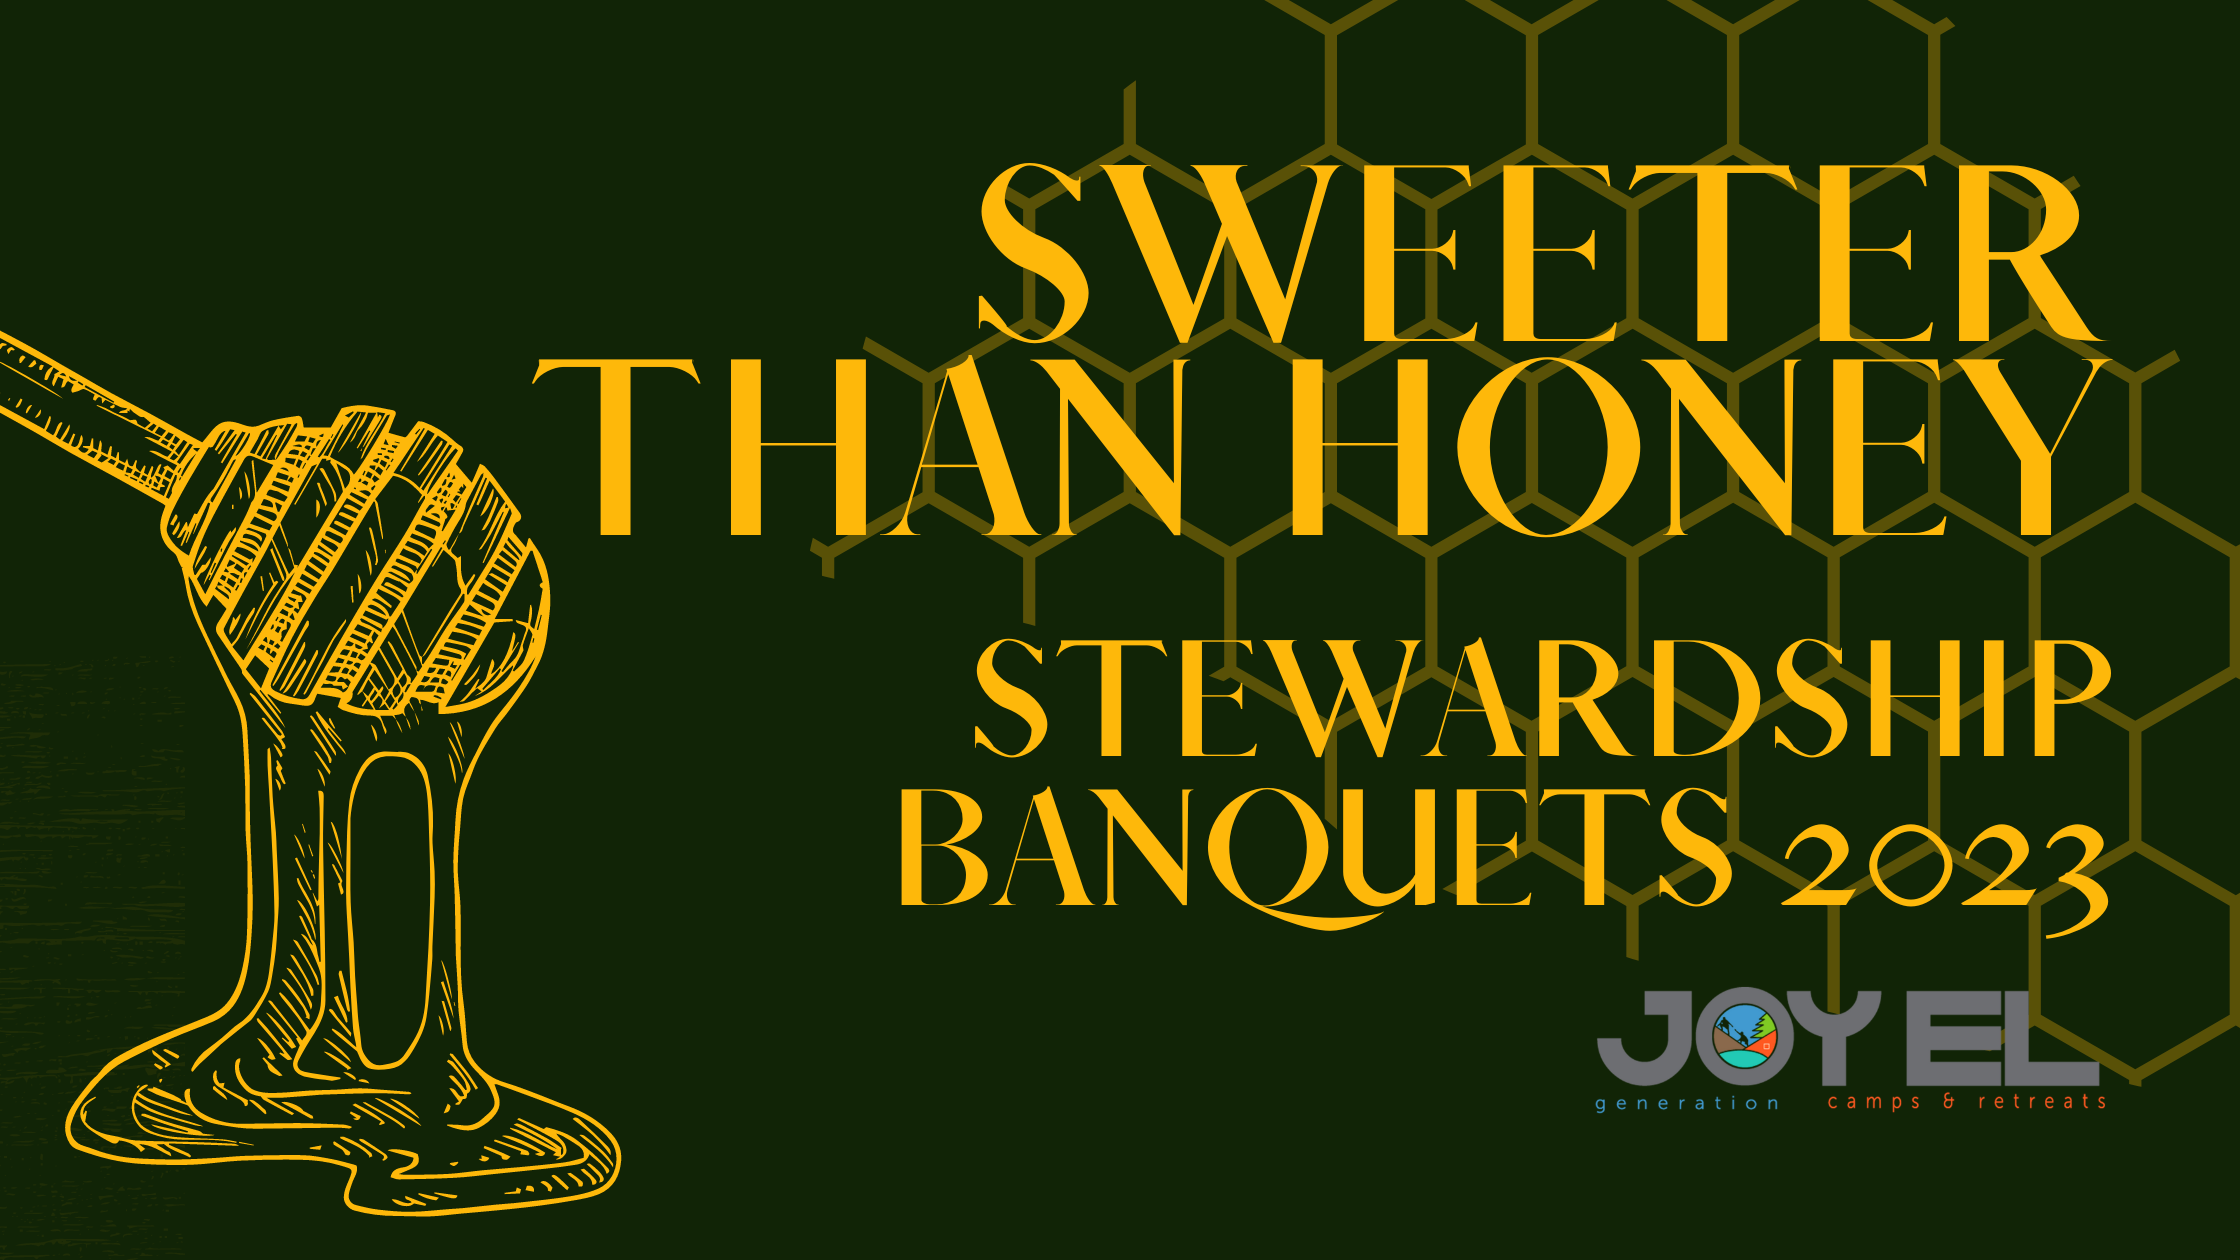 Stewardship Banquets 2023 - Sweeter Than Honey